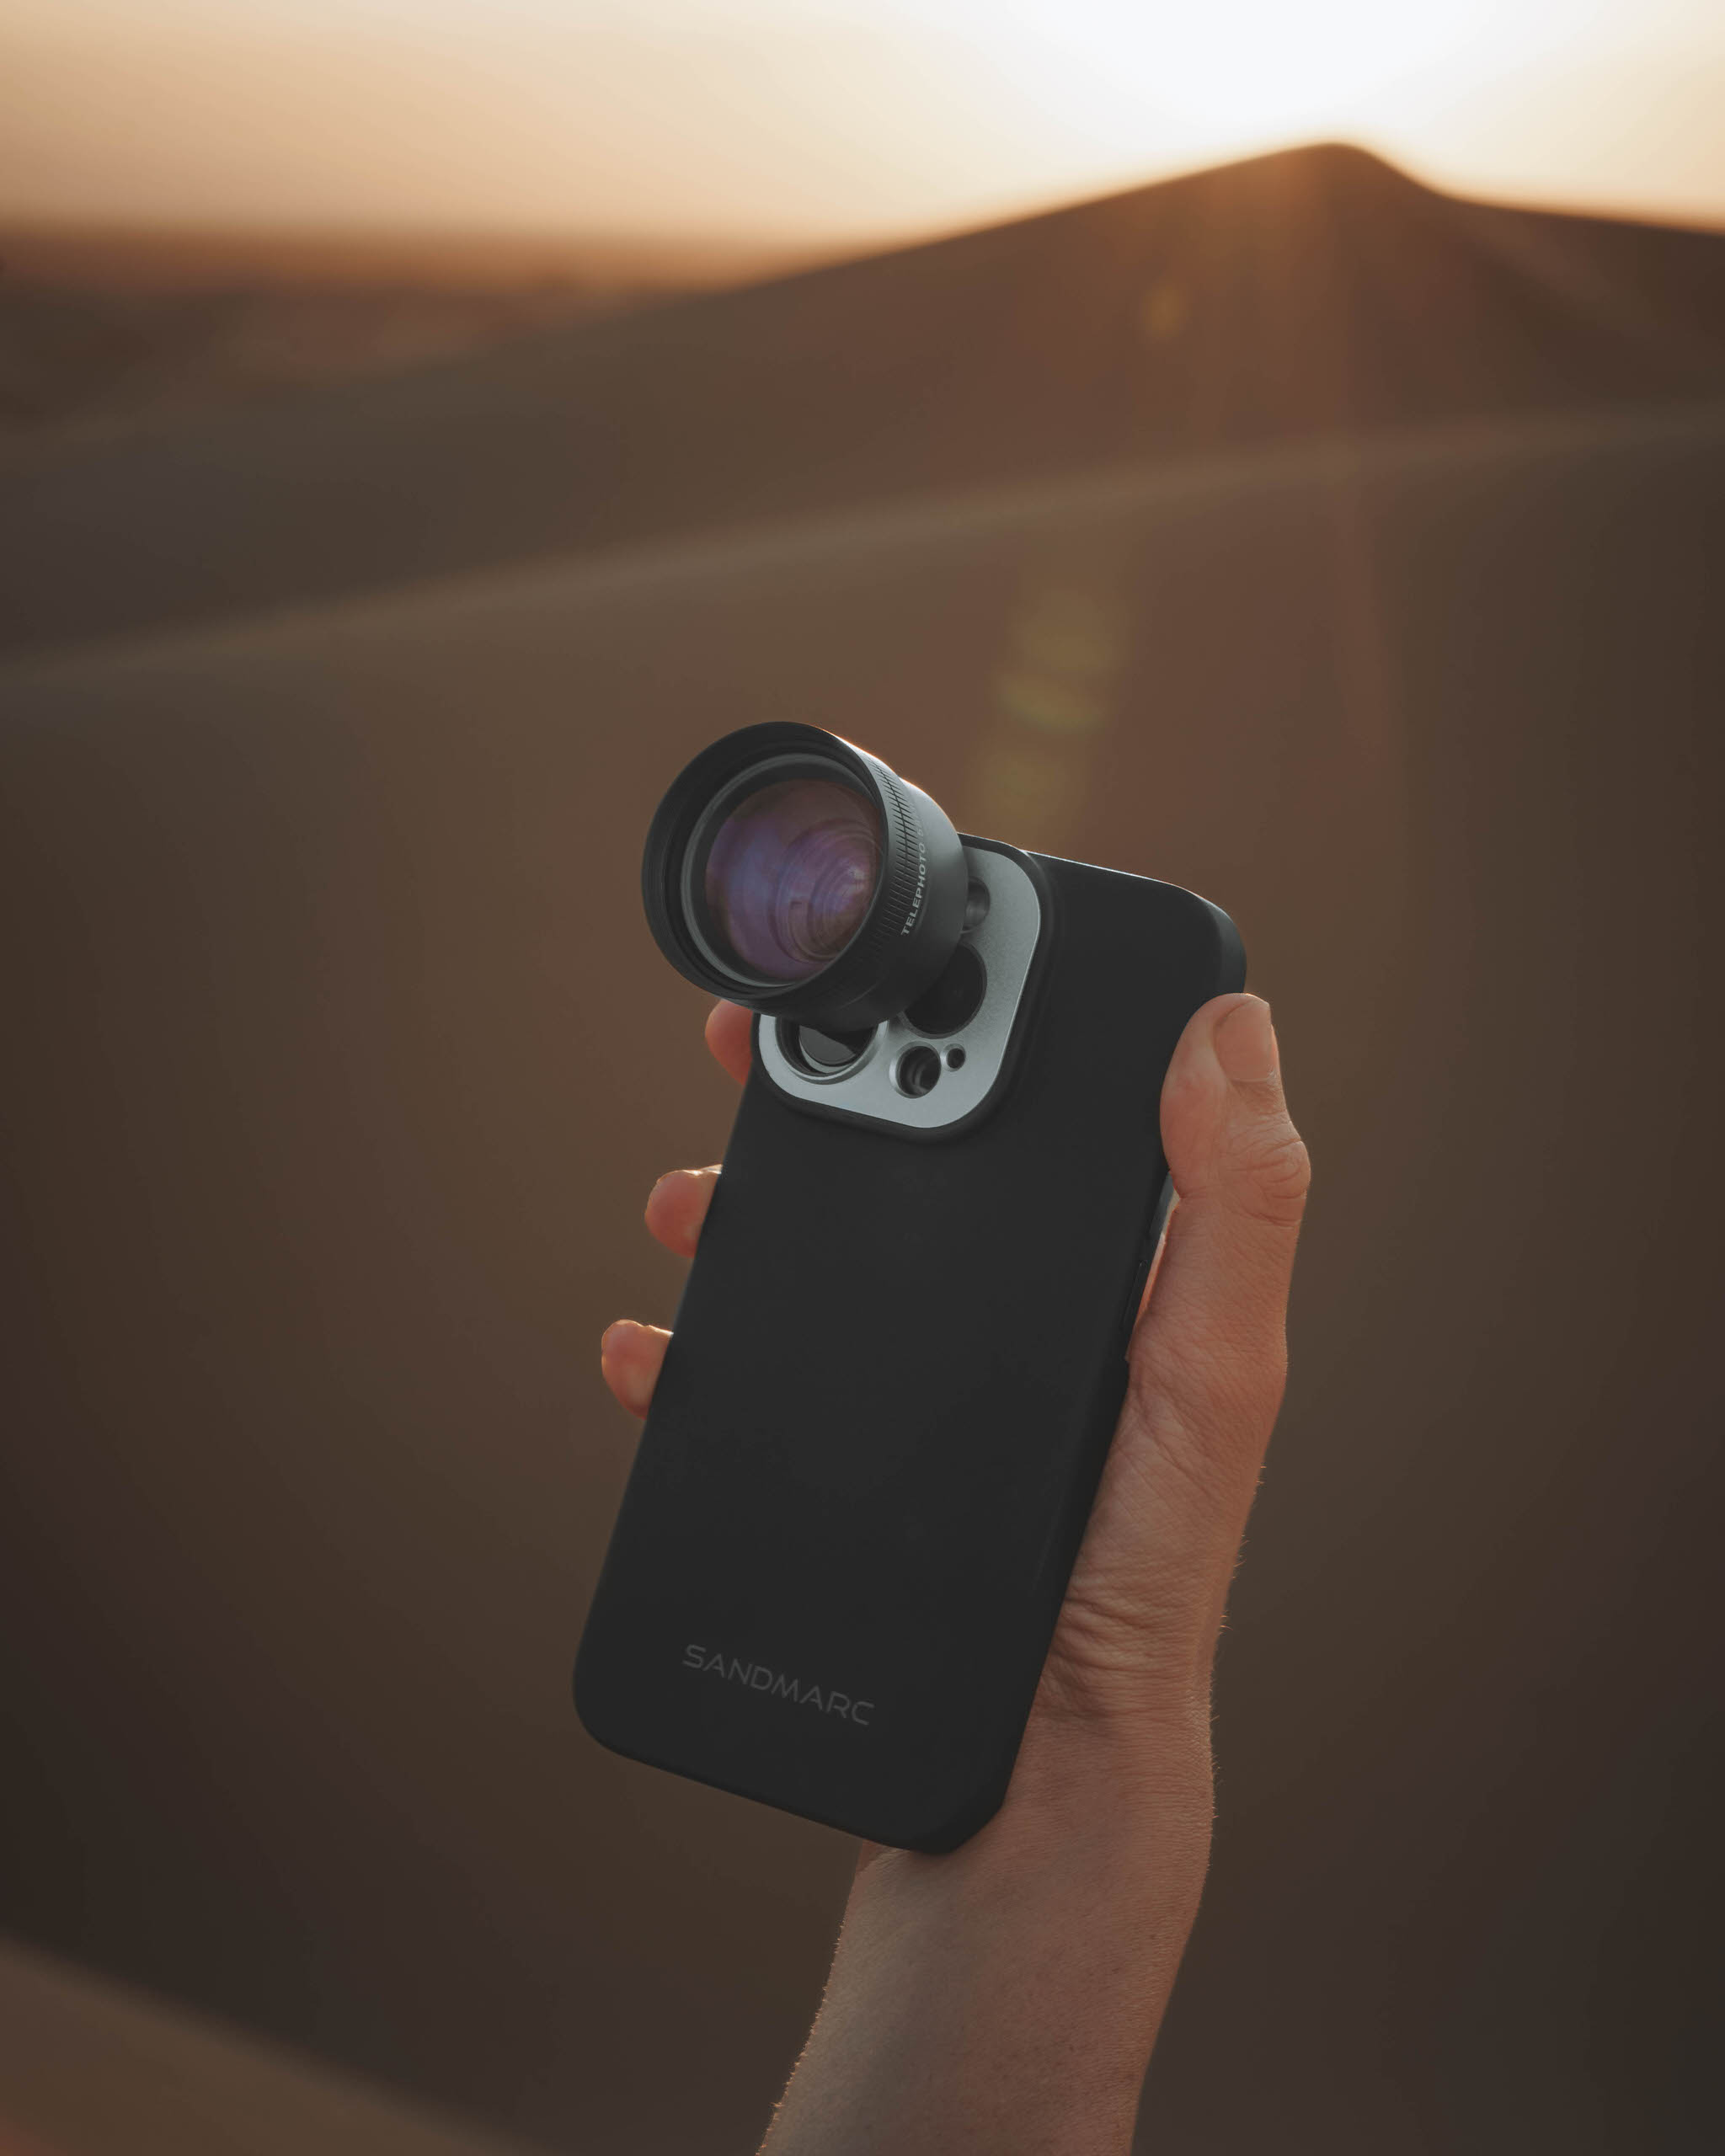 iPhone 14 Pro Max Lens - SANDMARC